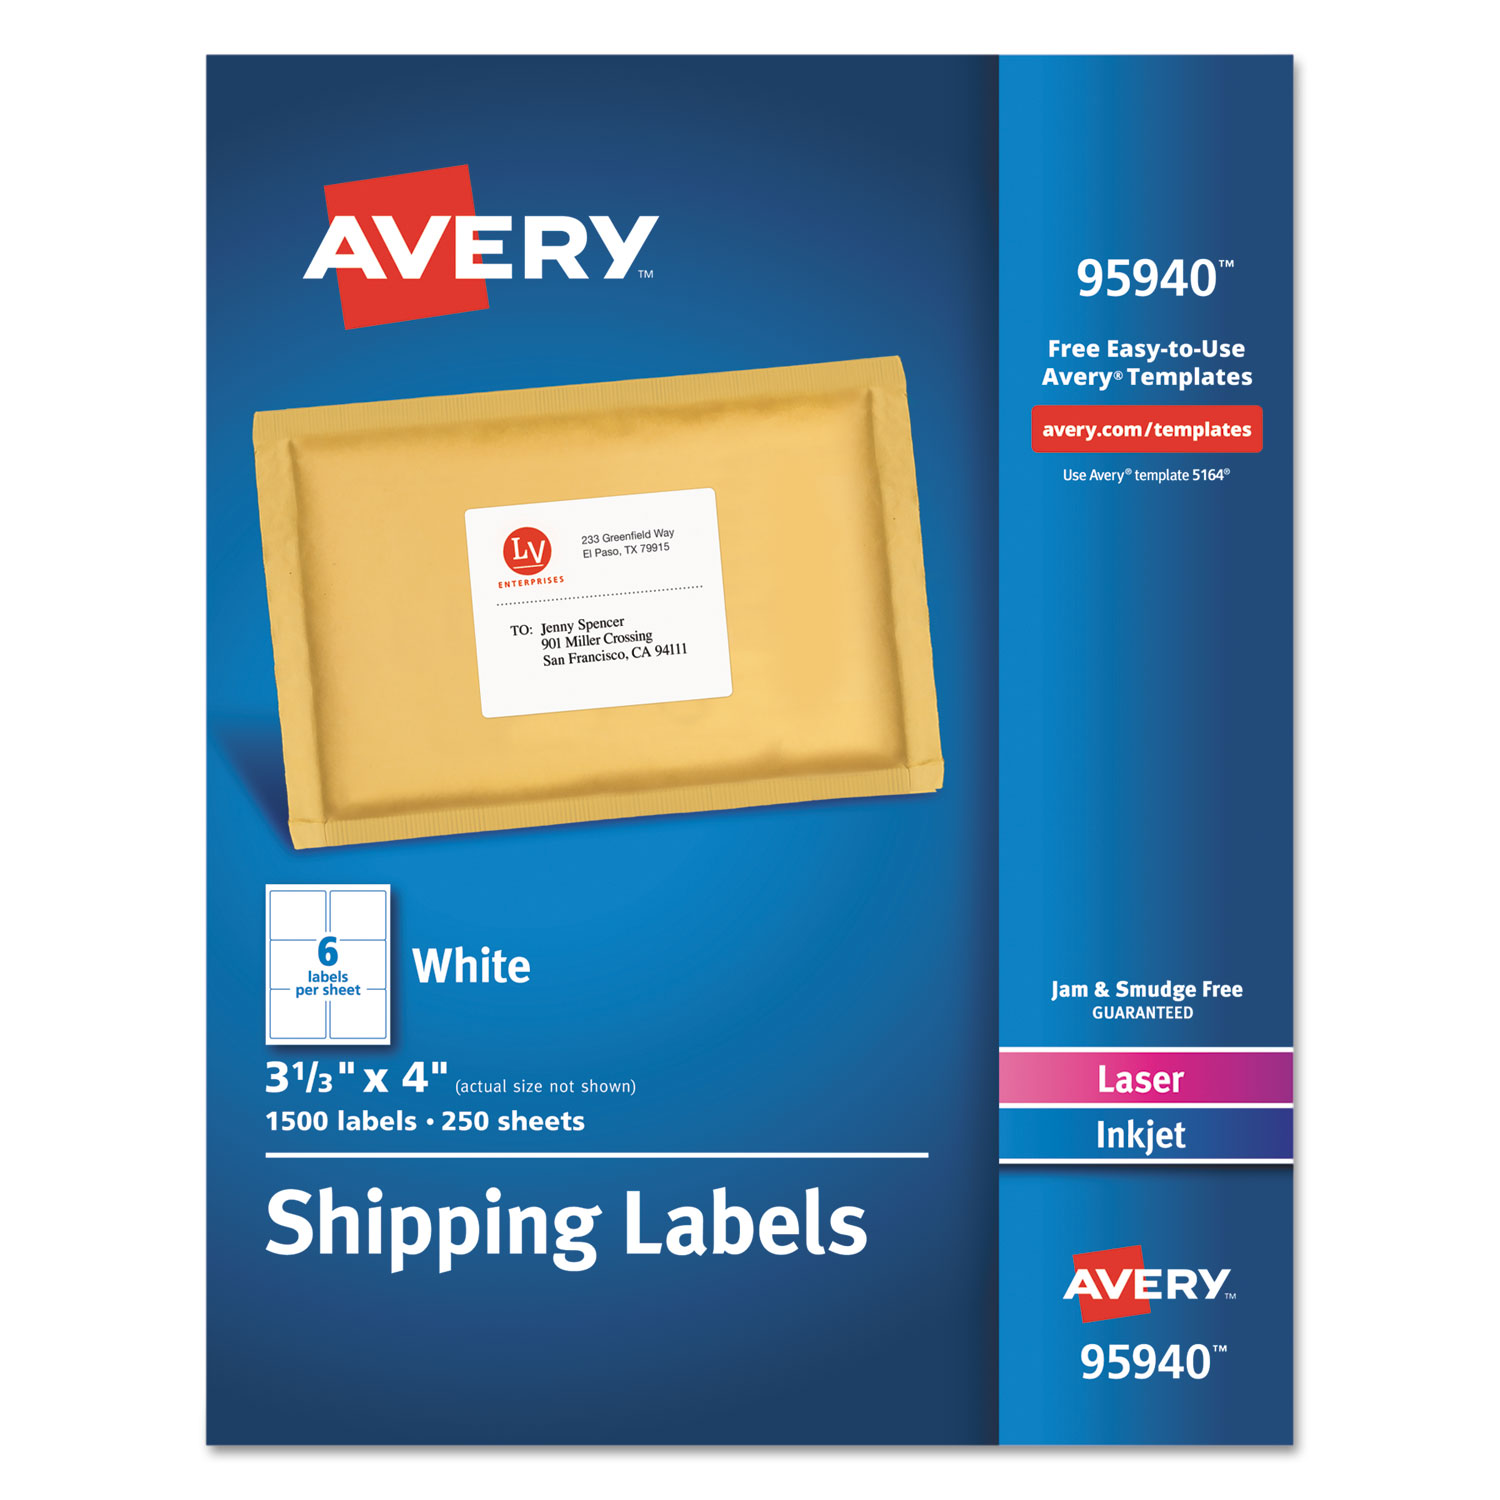  Avery 95940 White Shipping Labels-Bulk Packs, Inkjet/Laser Printers, 3.33 x 4, White, 6/Sheet, 250 Sheets/Box (AVE95940) 